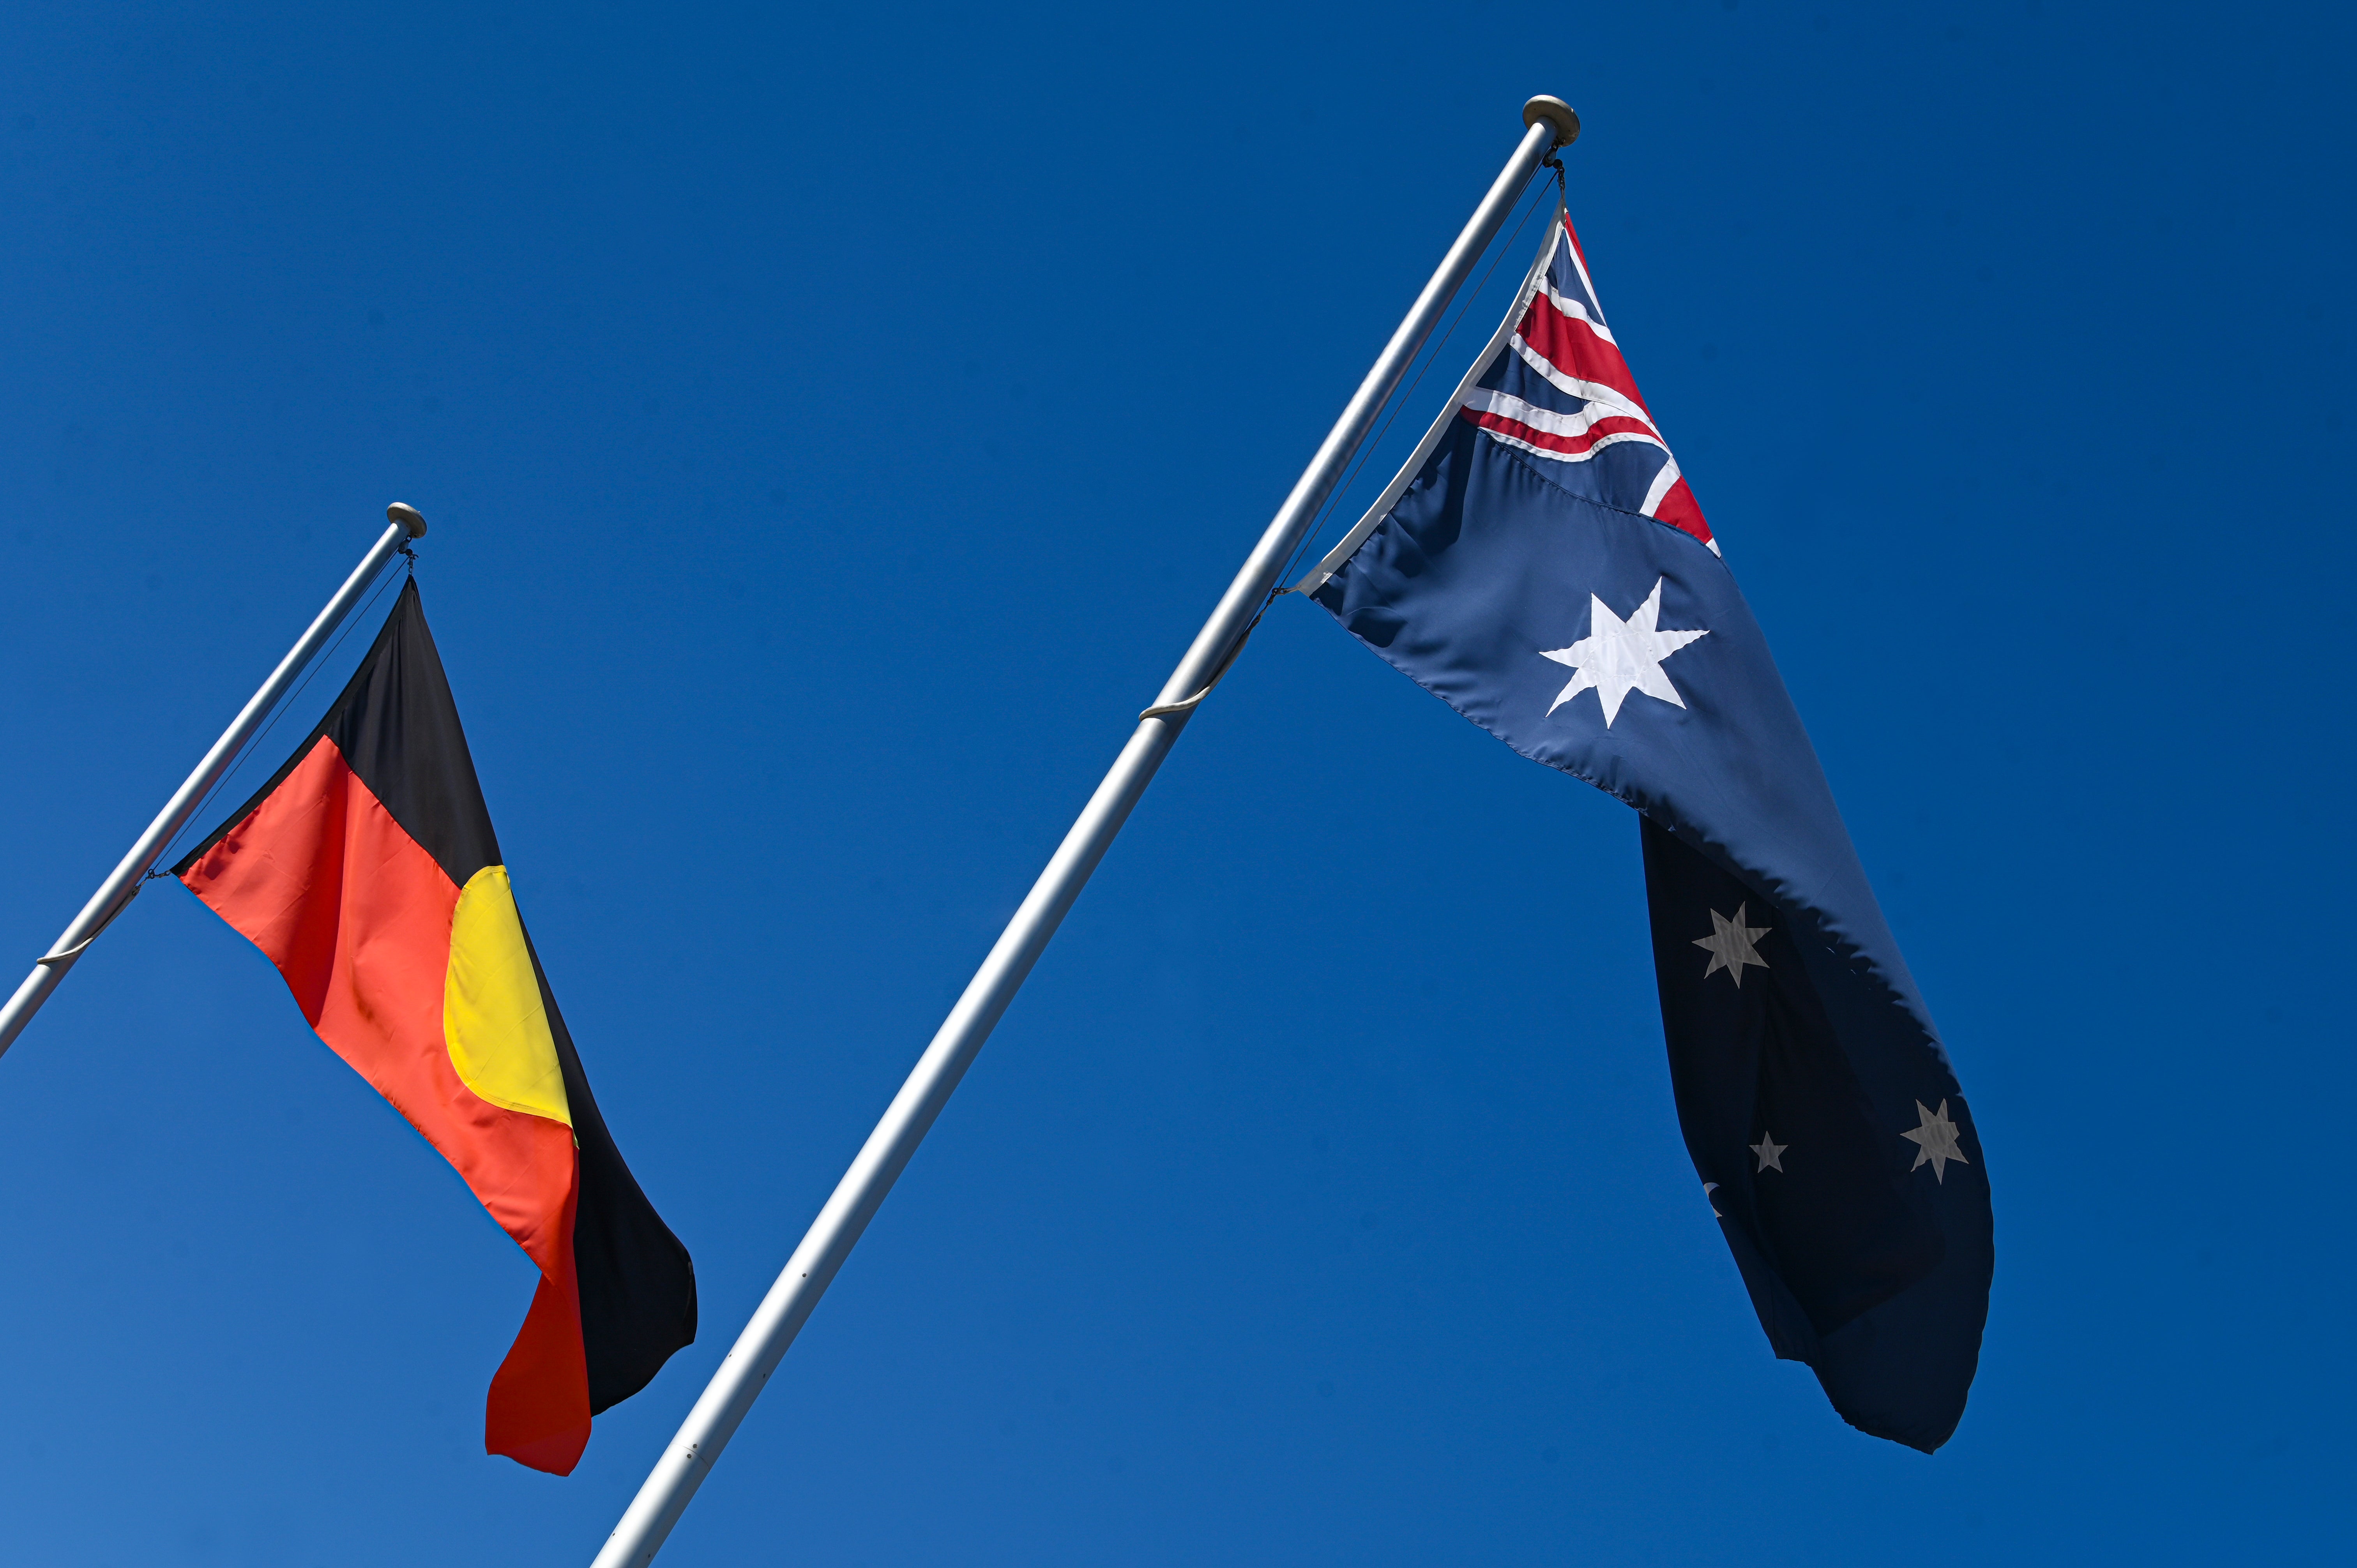 An Australian Aboriginal flag flies next to the Australian national flag in Canberra